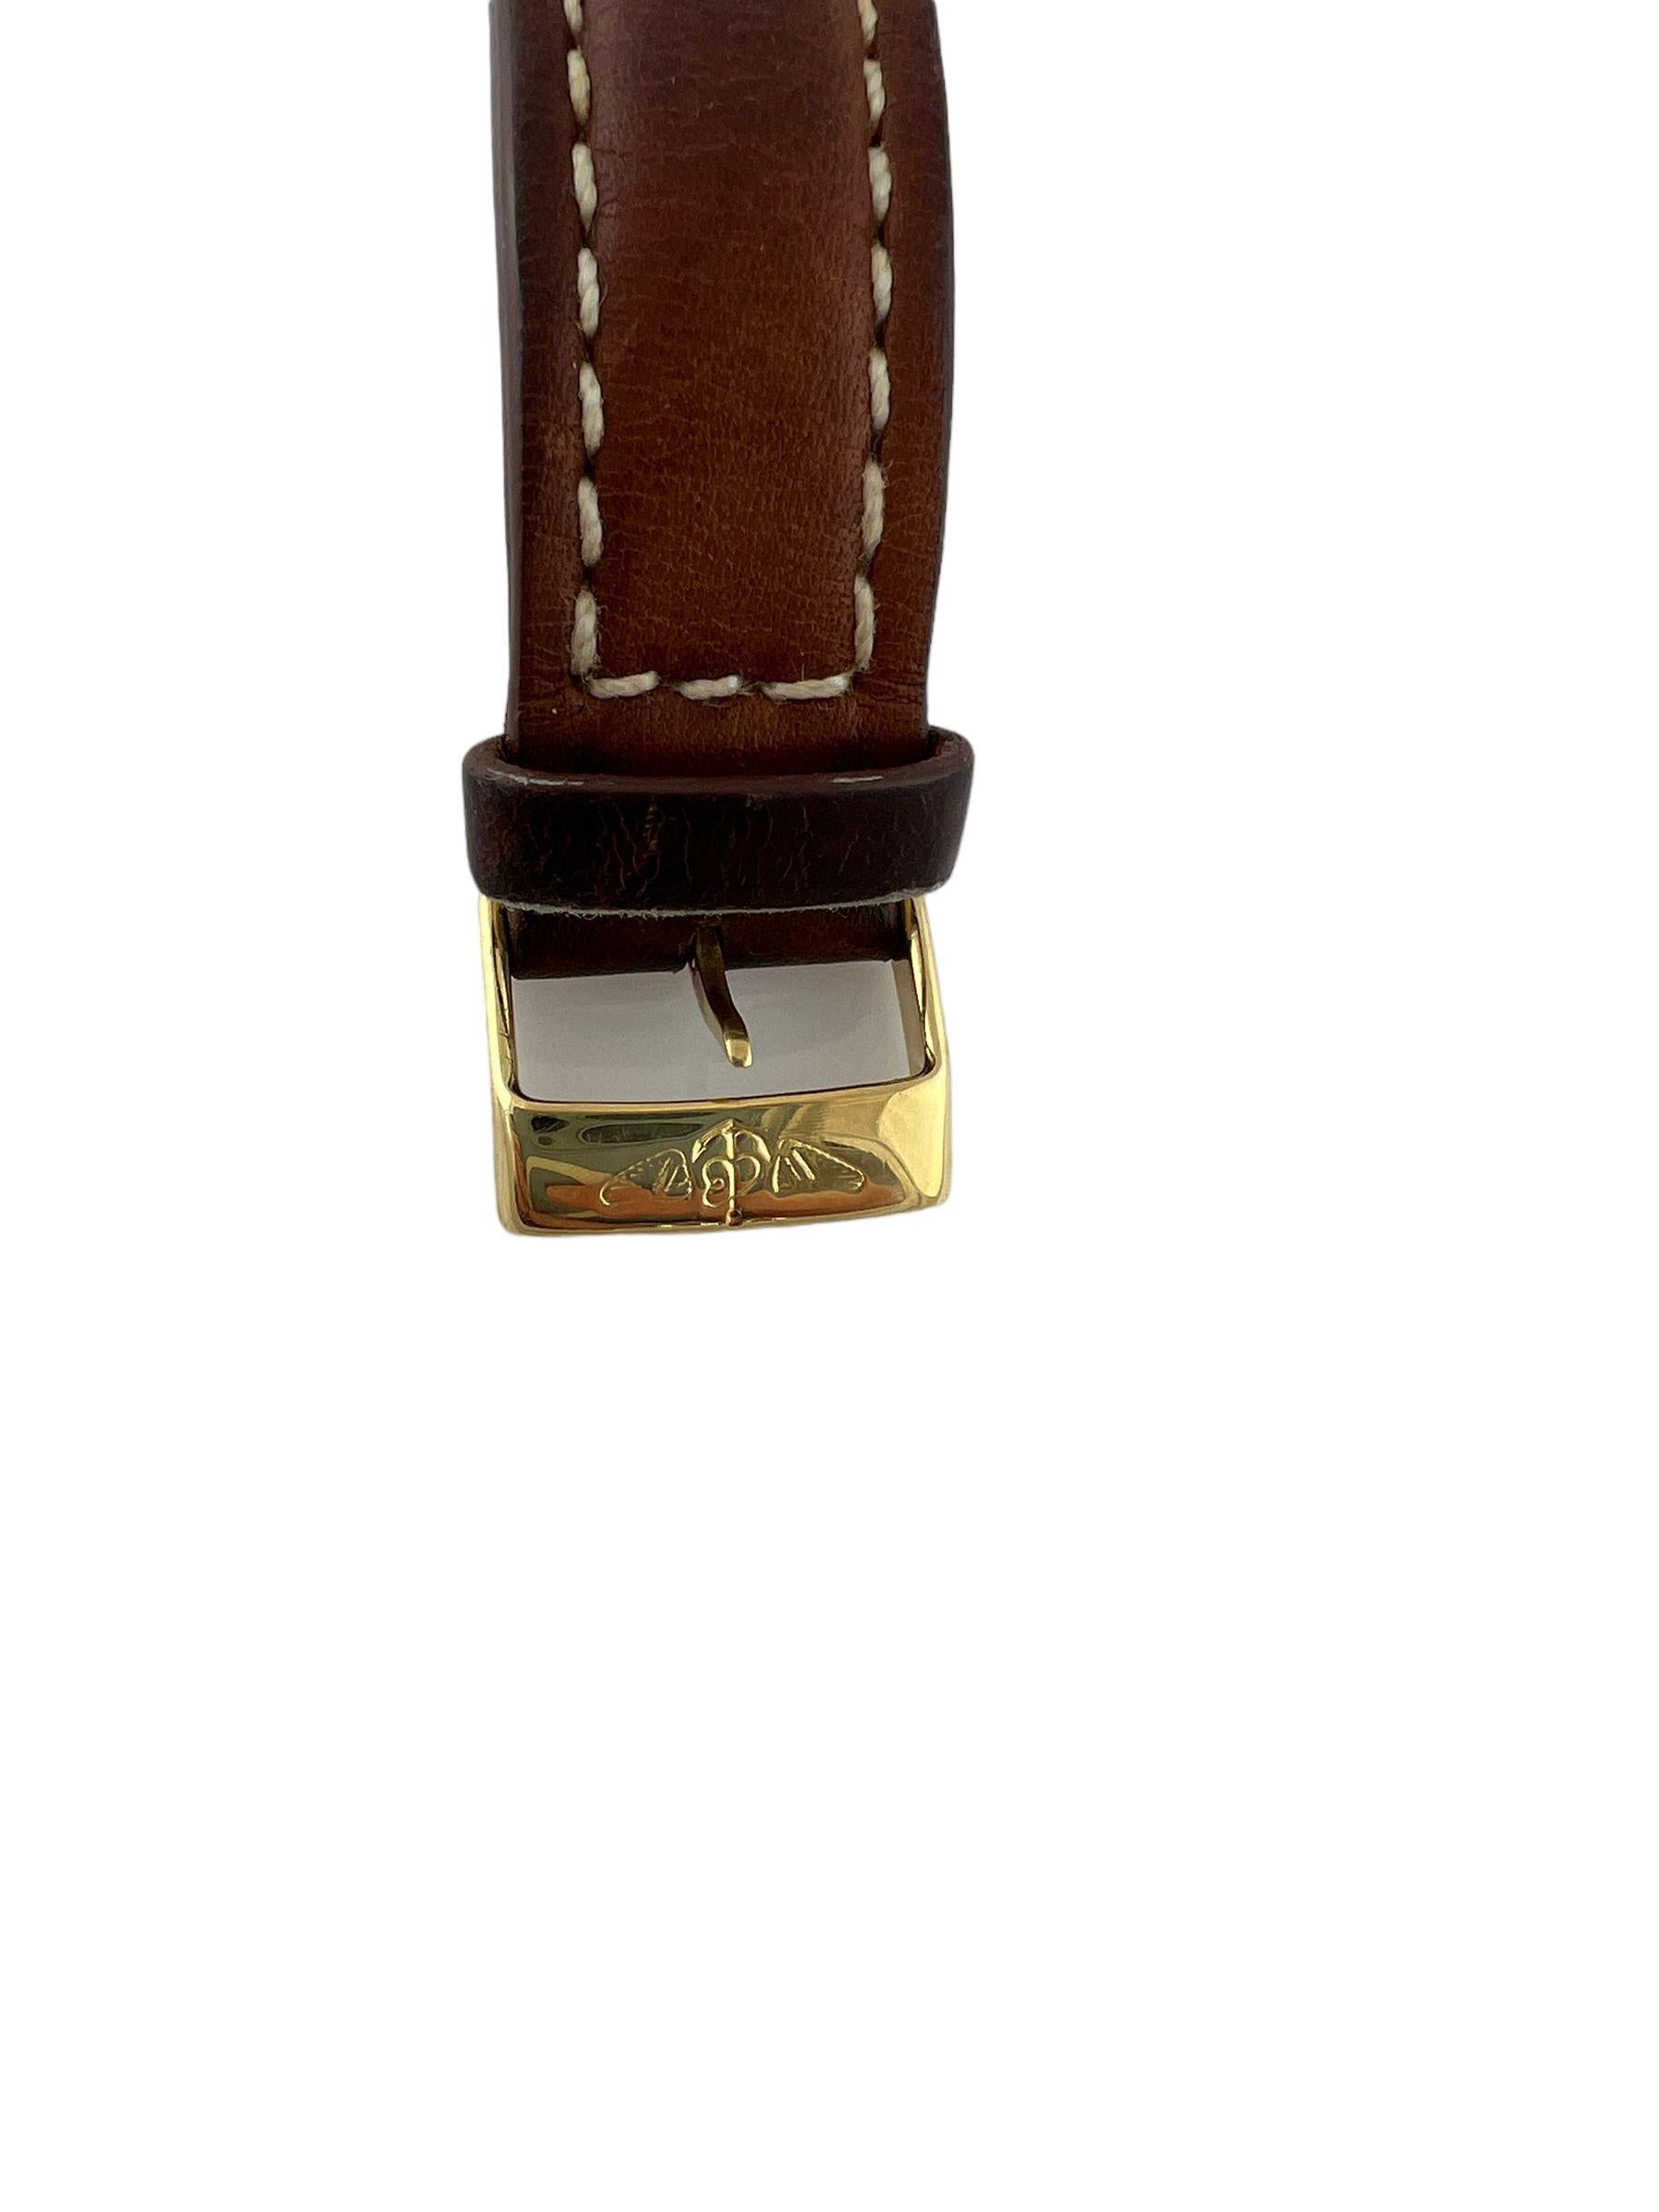 Breitling Chronomat 18k Yellow Gold Men's Watch Leather Band K13047X 2